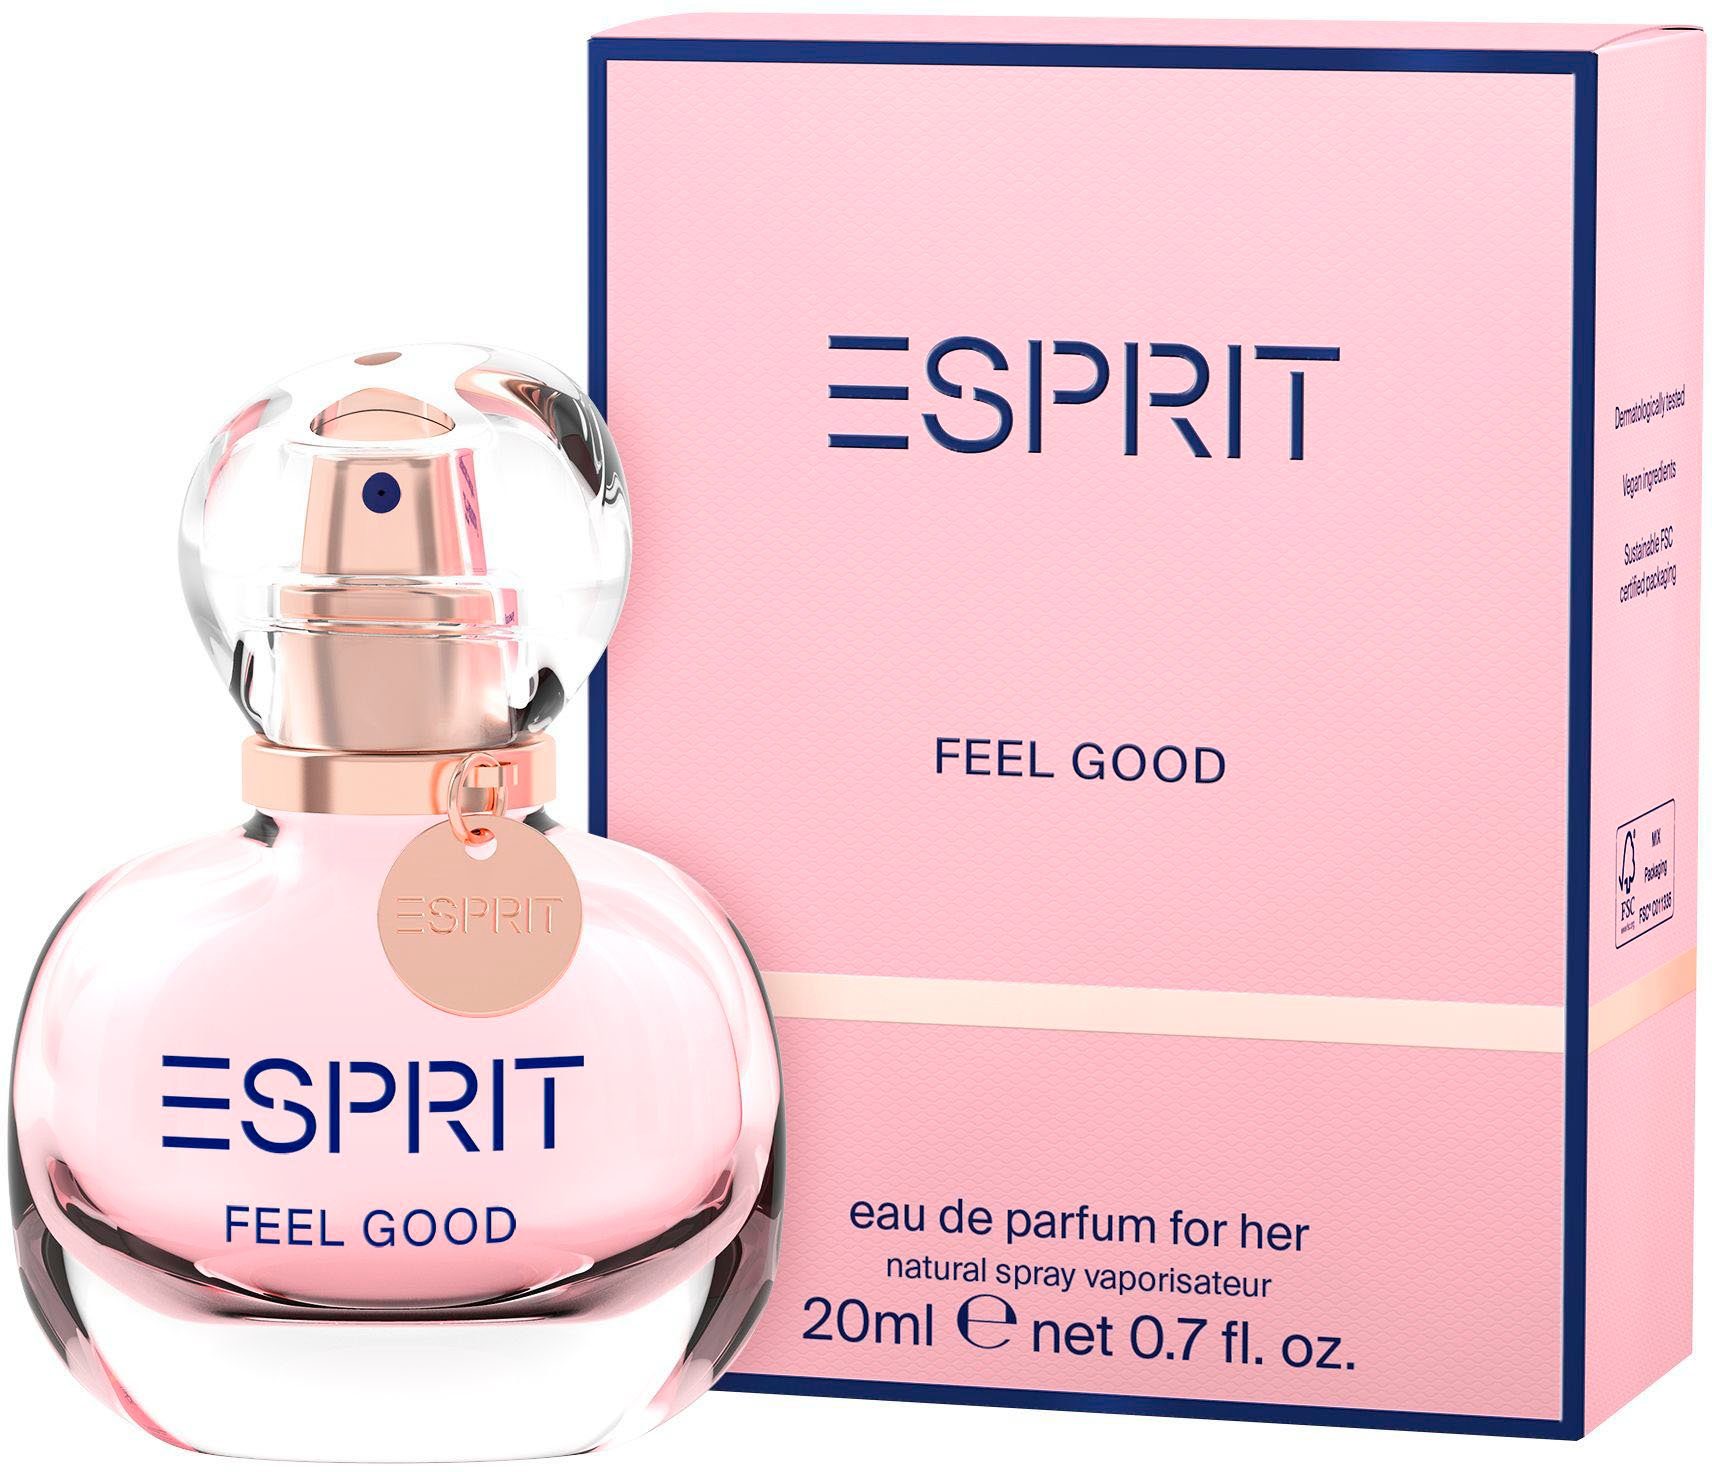 Esprit Eau Parfum GOOD de EdP 20 her for ml FEEL